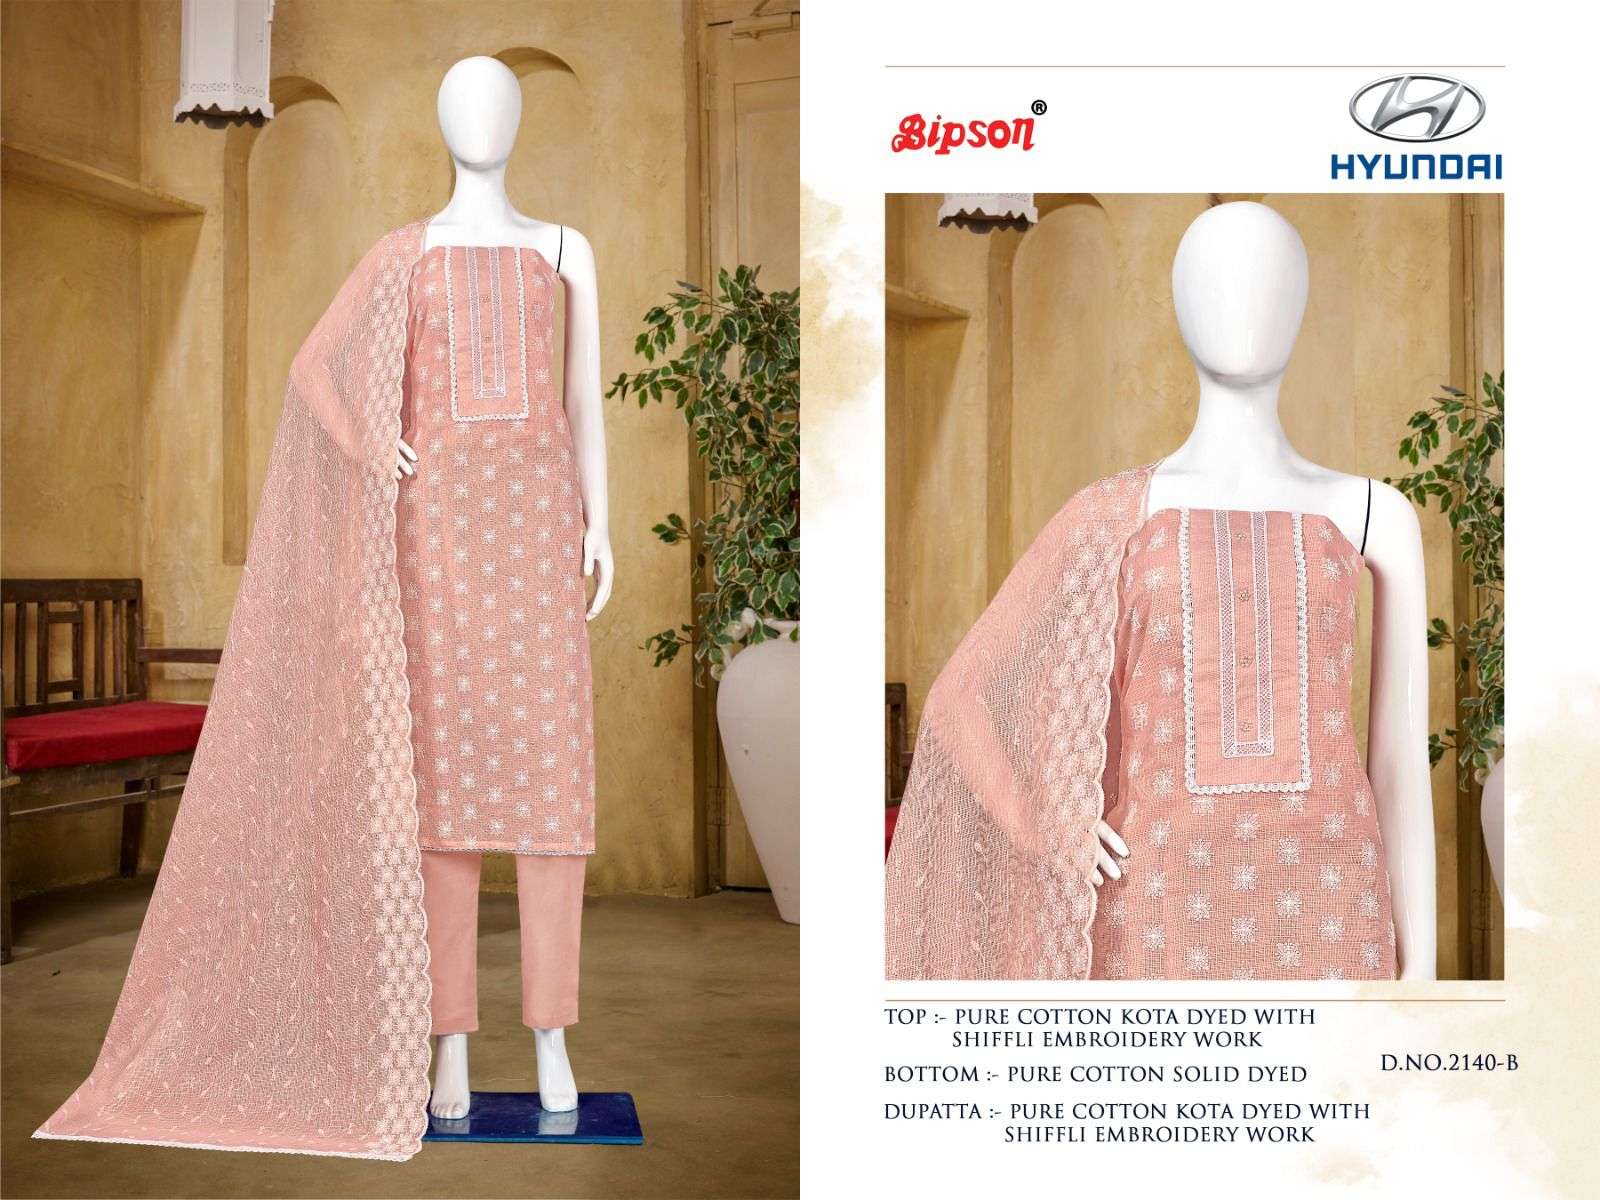 bipson prints hyundai 2140 series pure cotton designer dress material catalogue wholesaler surat 